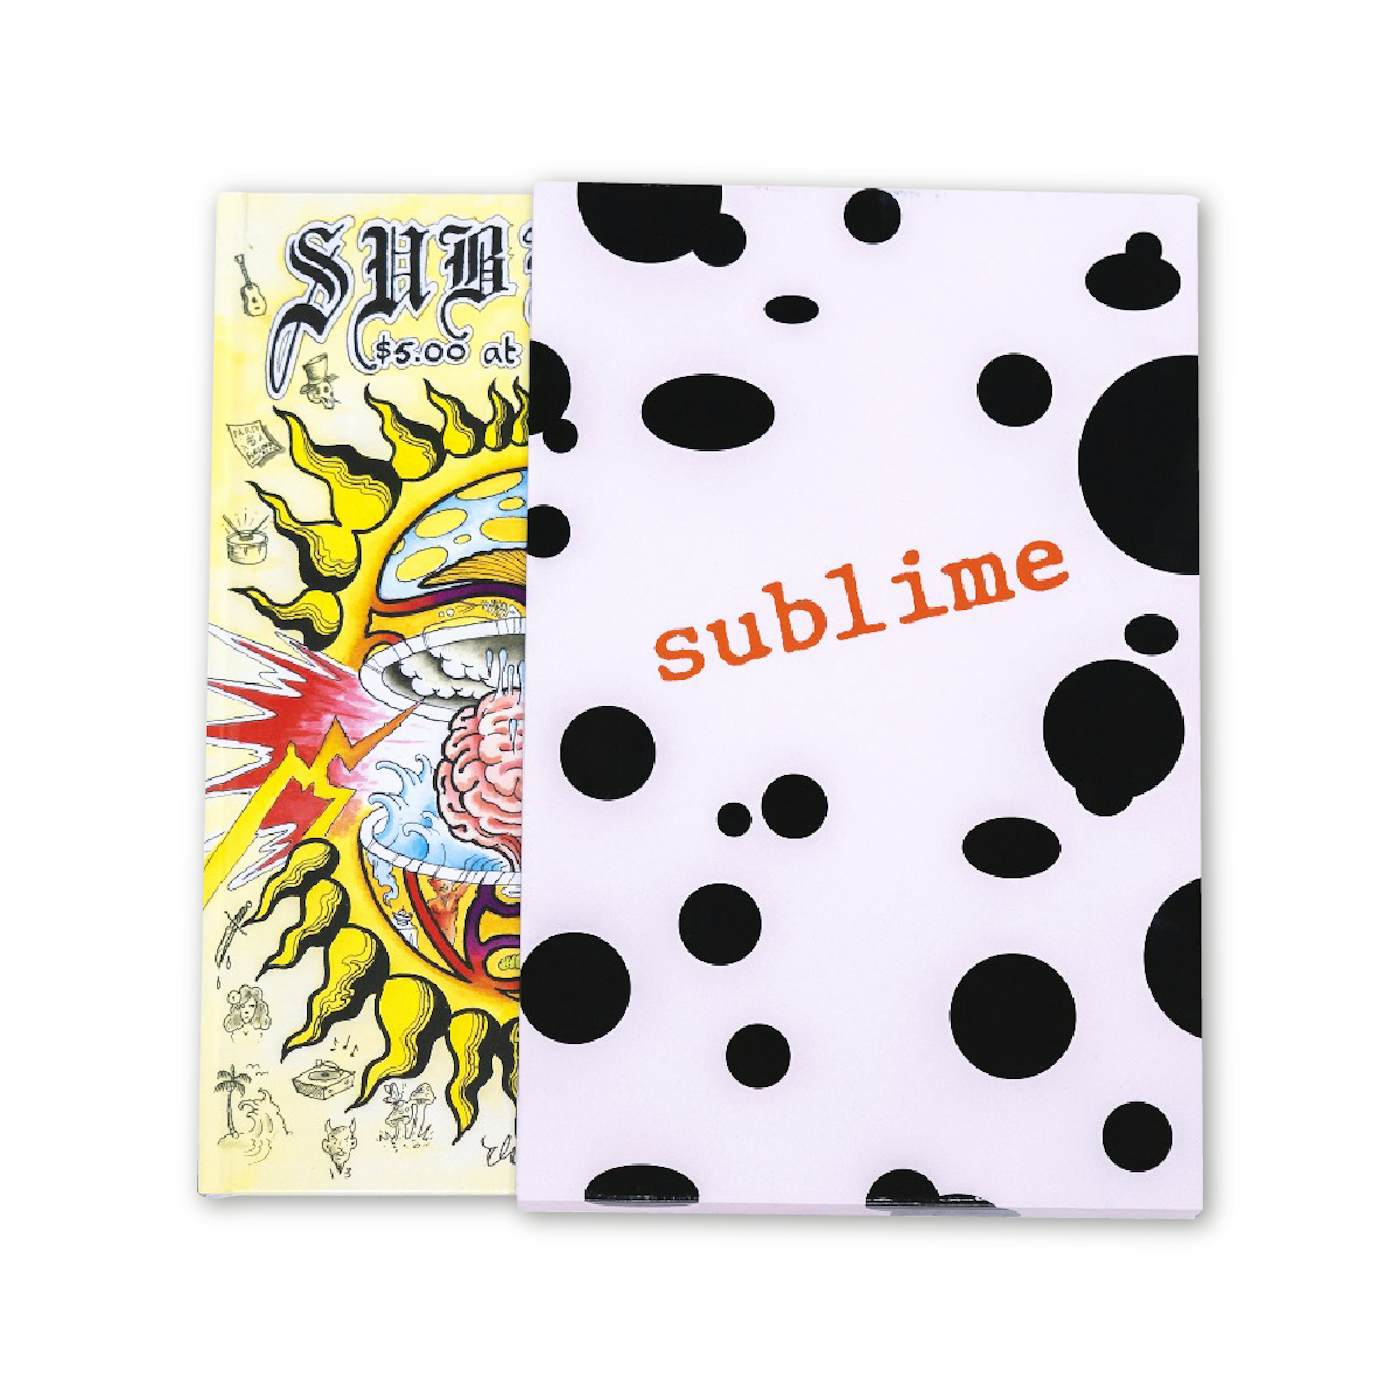 Sublime: $5 at the Door - Deluxe Book & Art Prints